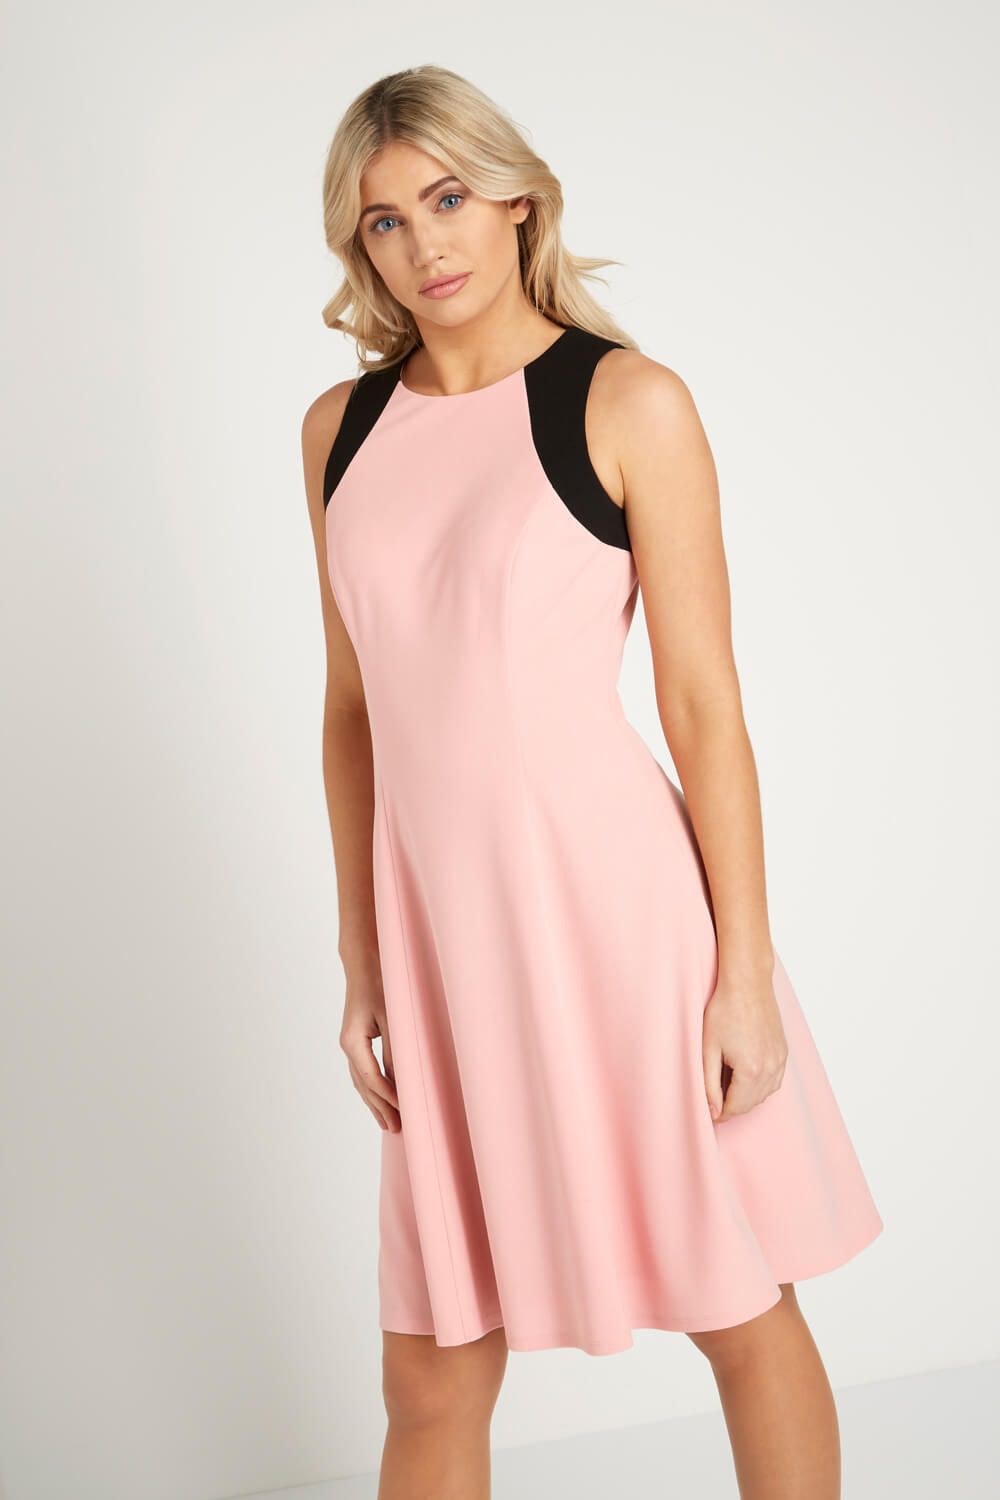 roman pink dress